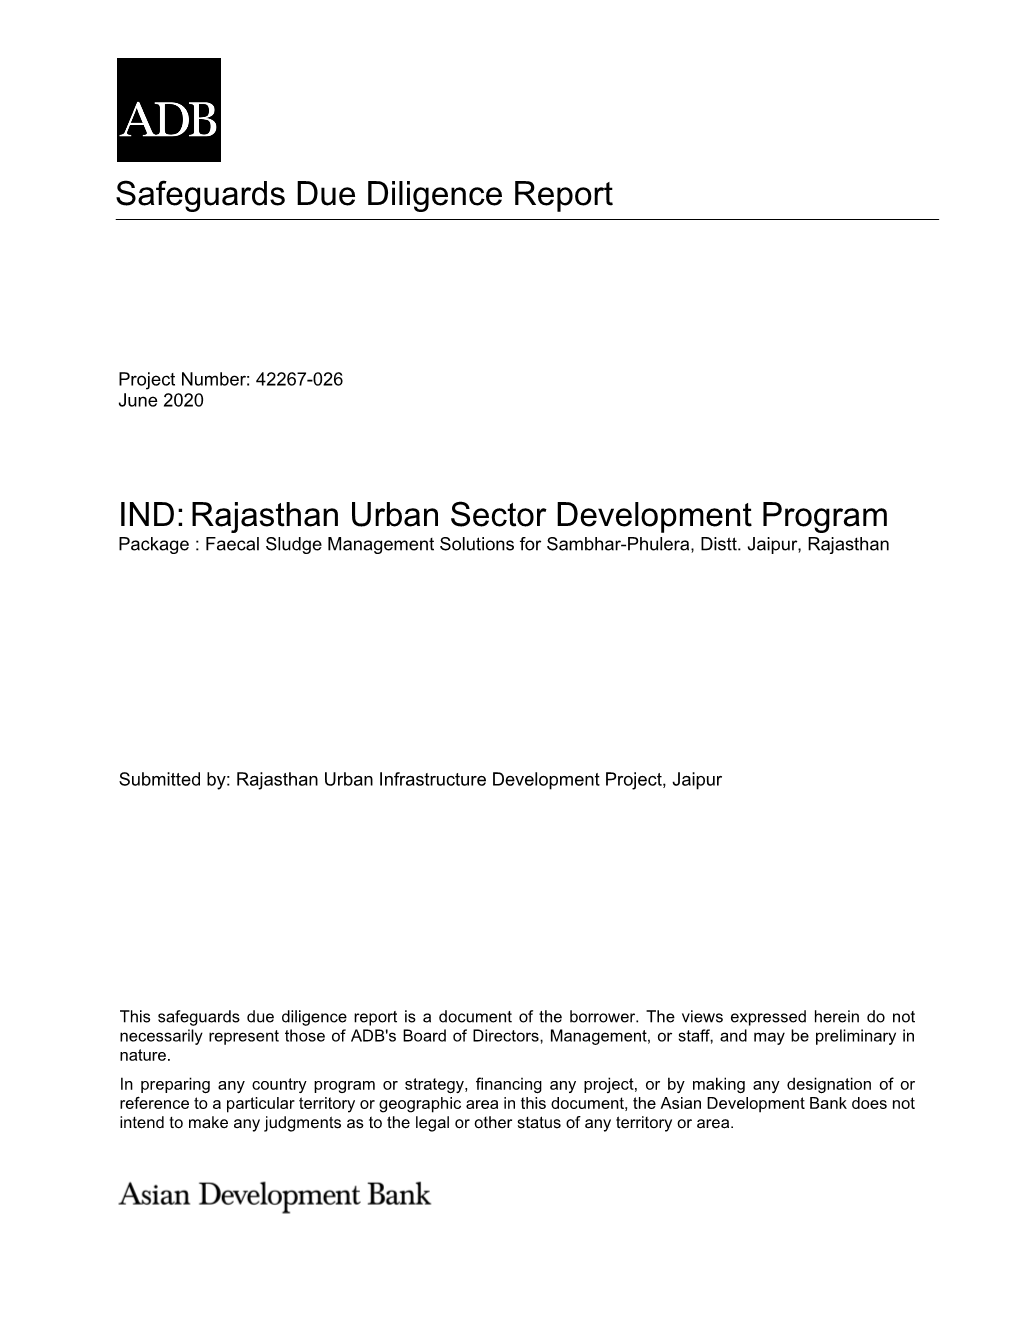 42267-026: Rajasthan Urban Sector Development Program